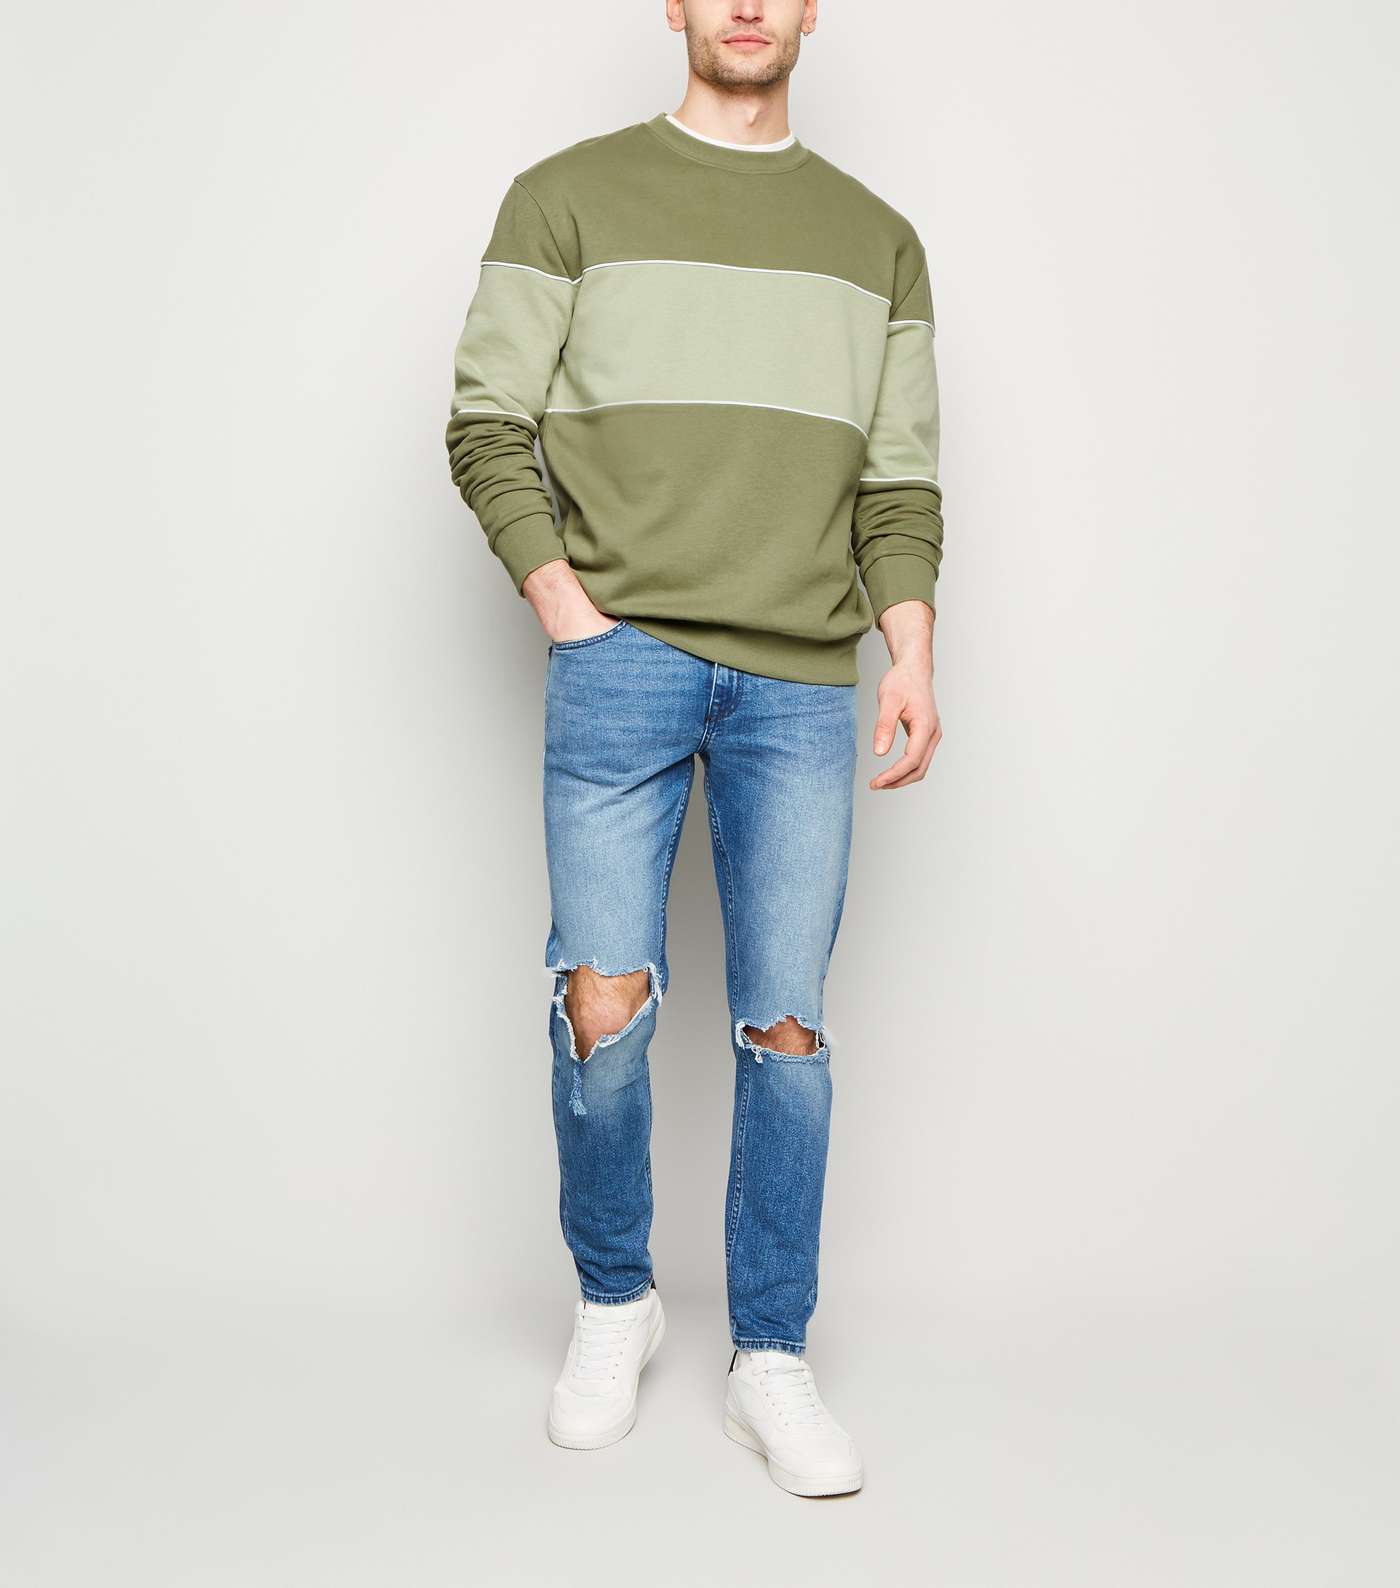 Plus Size Olive Colour Block Sweatshirt Image 2